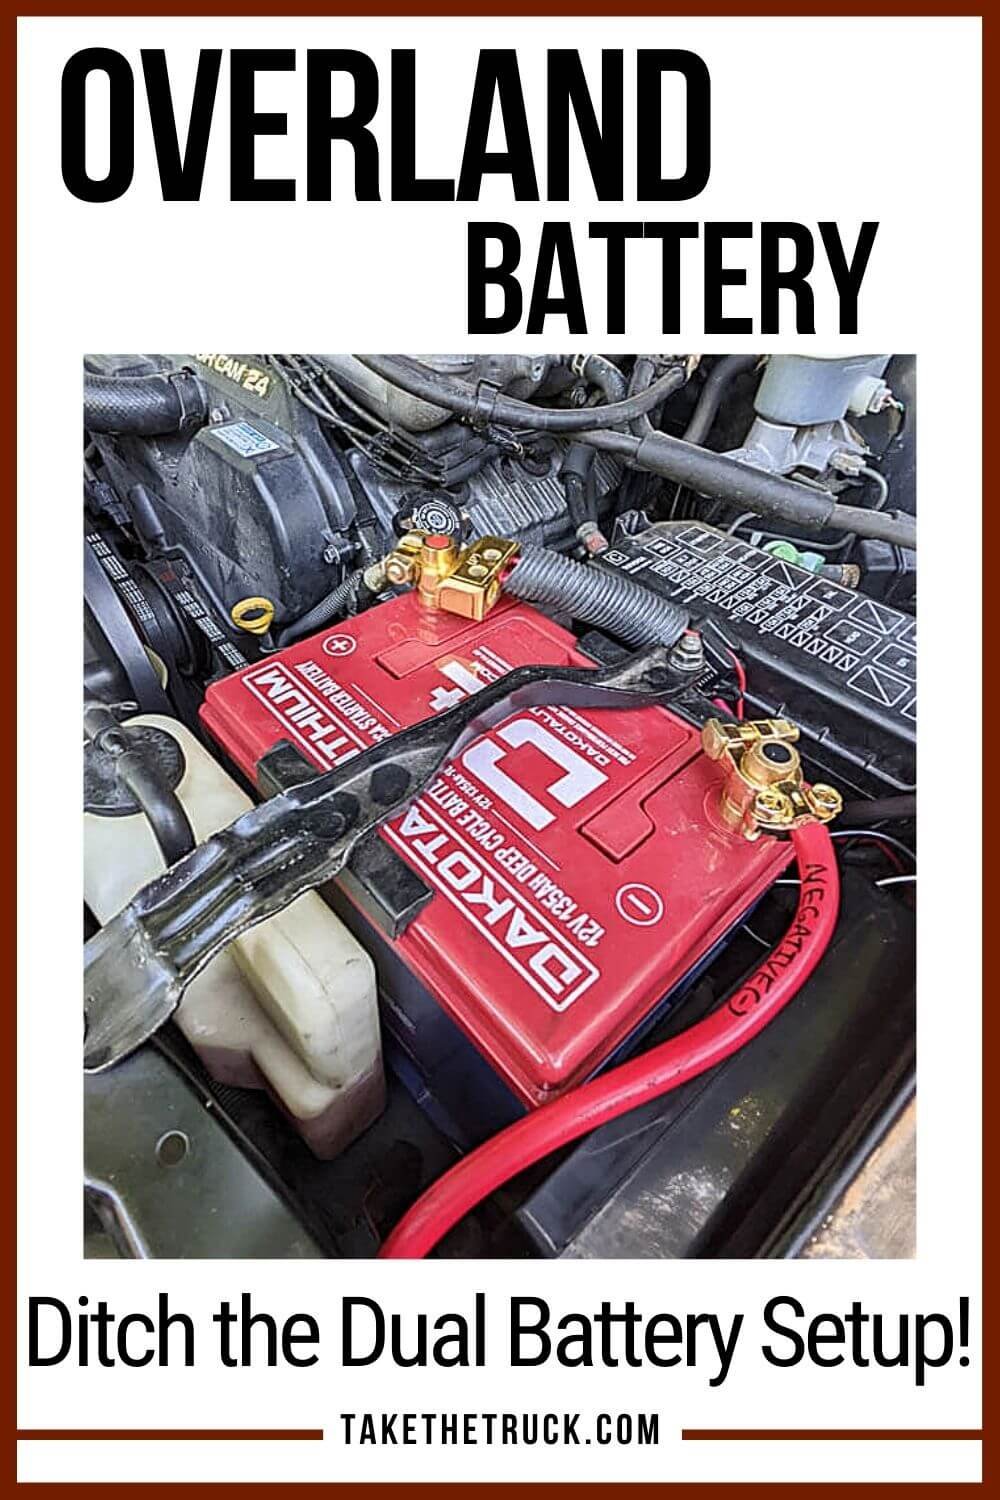 overland battery | camping battery setup | Camping power | overland dual battery alternate | camping battery power | deep cycle camping battery | lithium car battery camping power | 